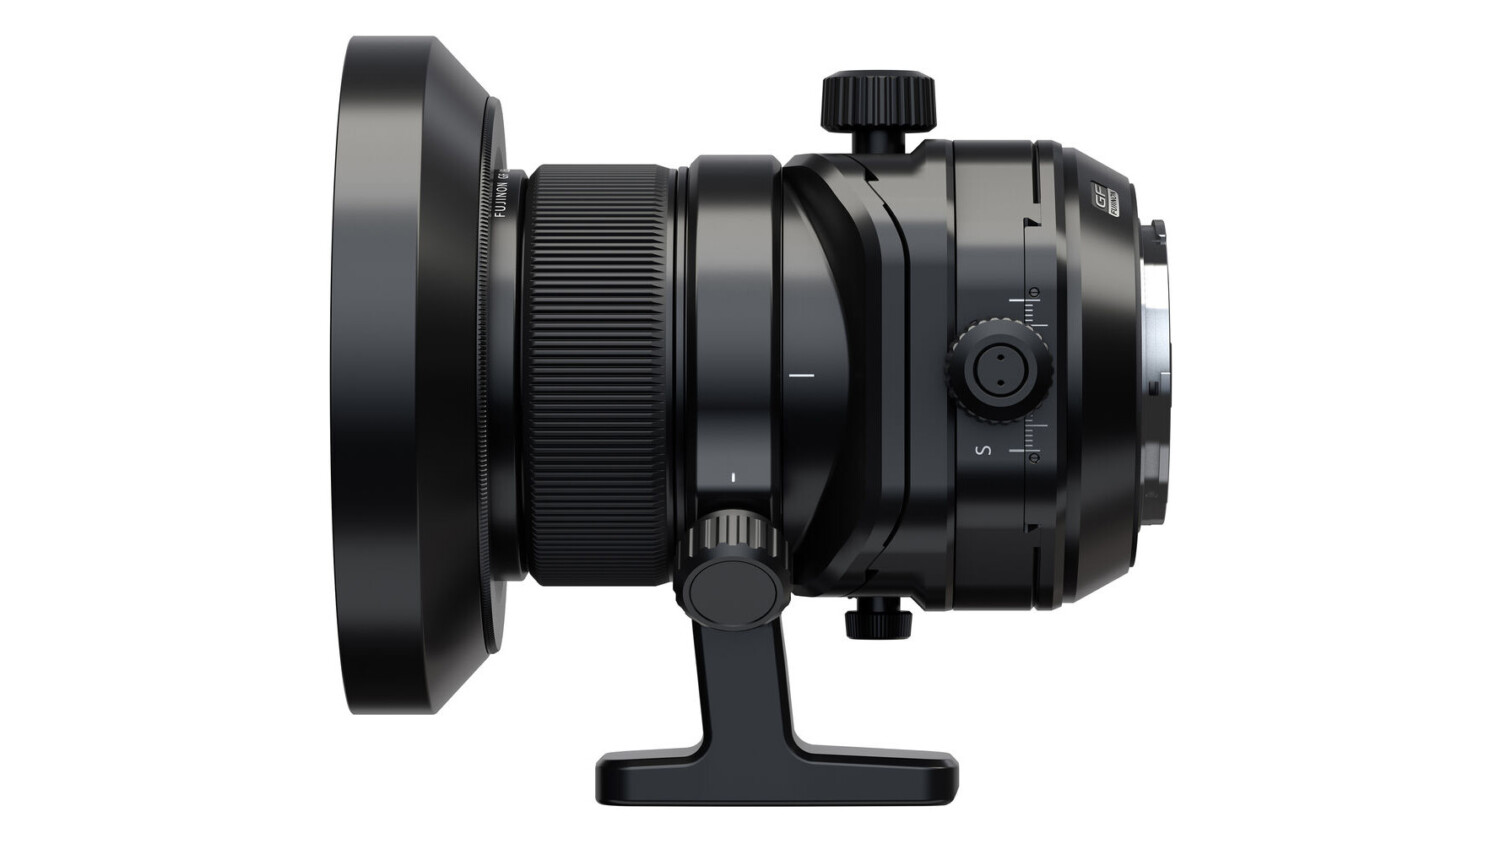 Fujifilm Tilt Shift Lenses and More Officially Announced